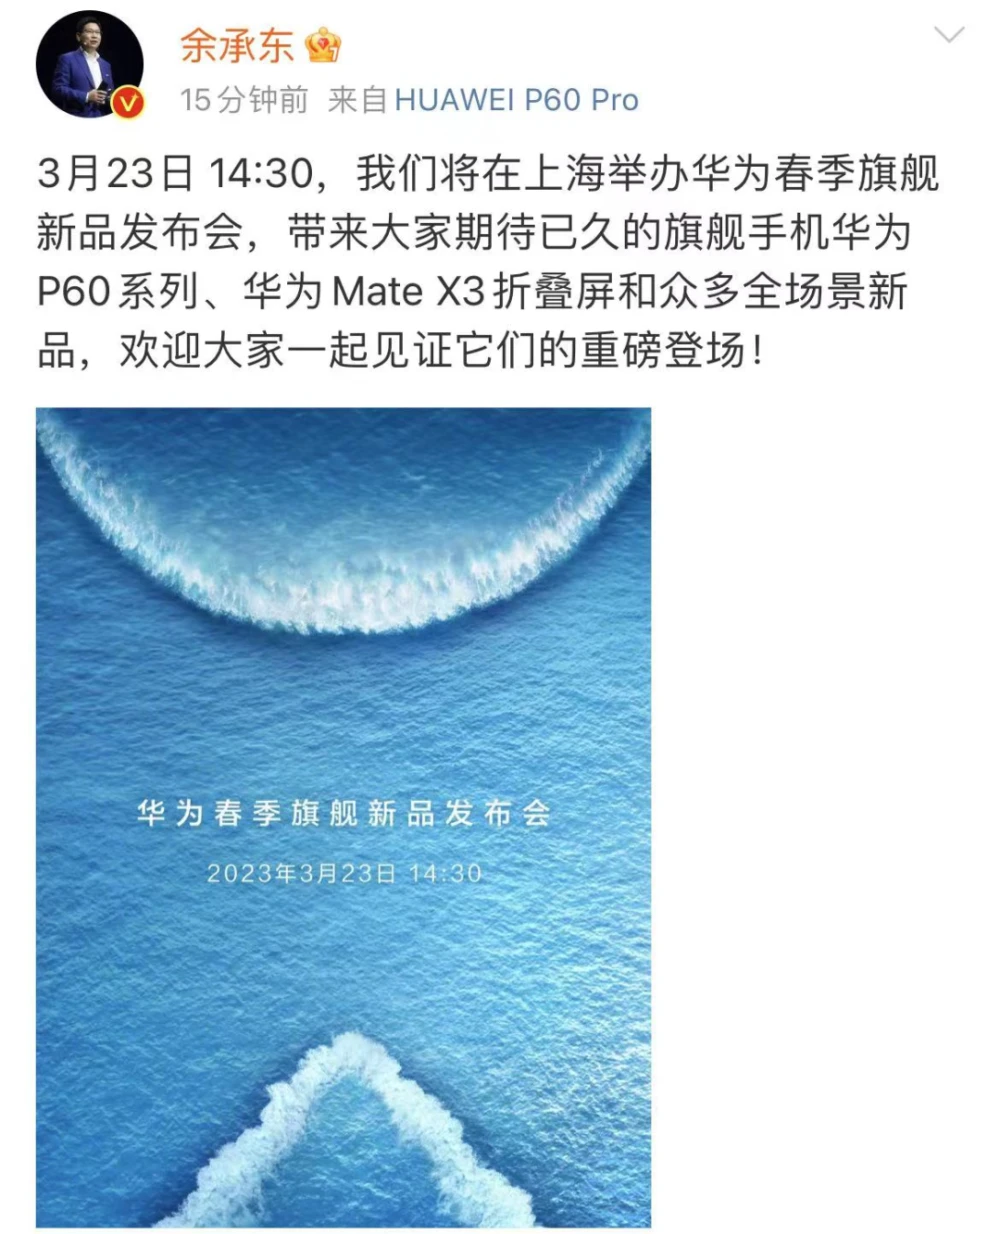  Huawei P60 и Mate X3: официальная дата глобального анонса Huawei  - 1000